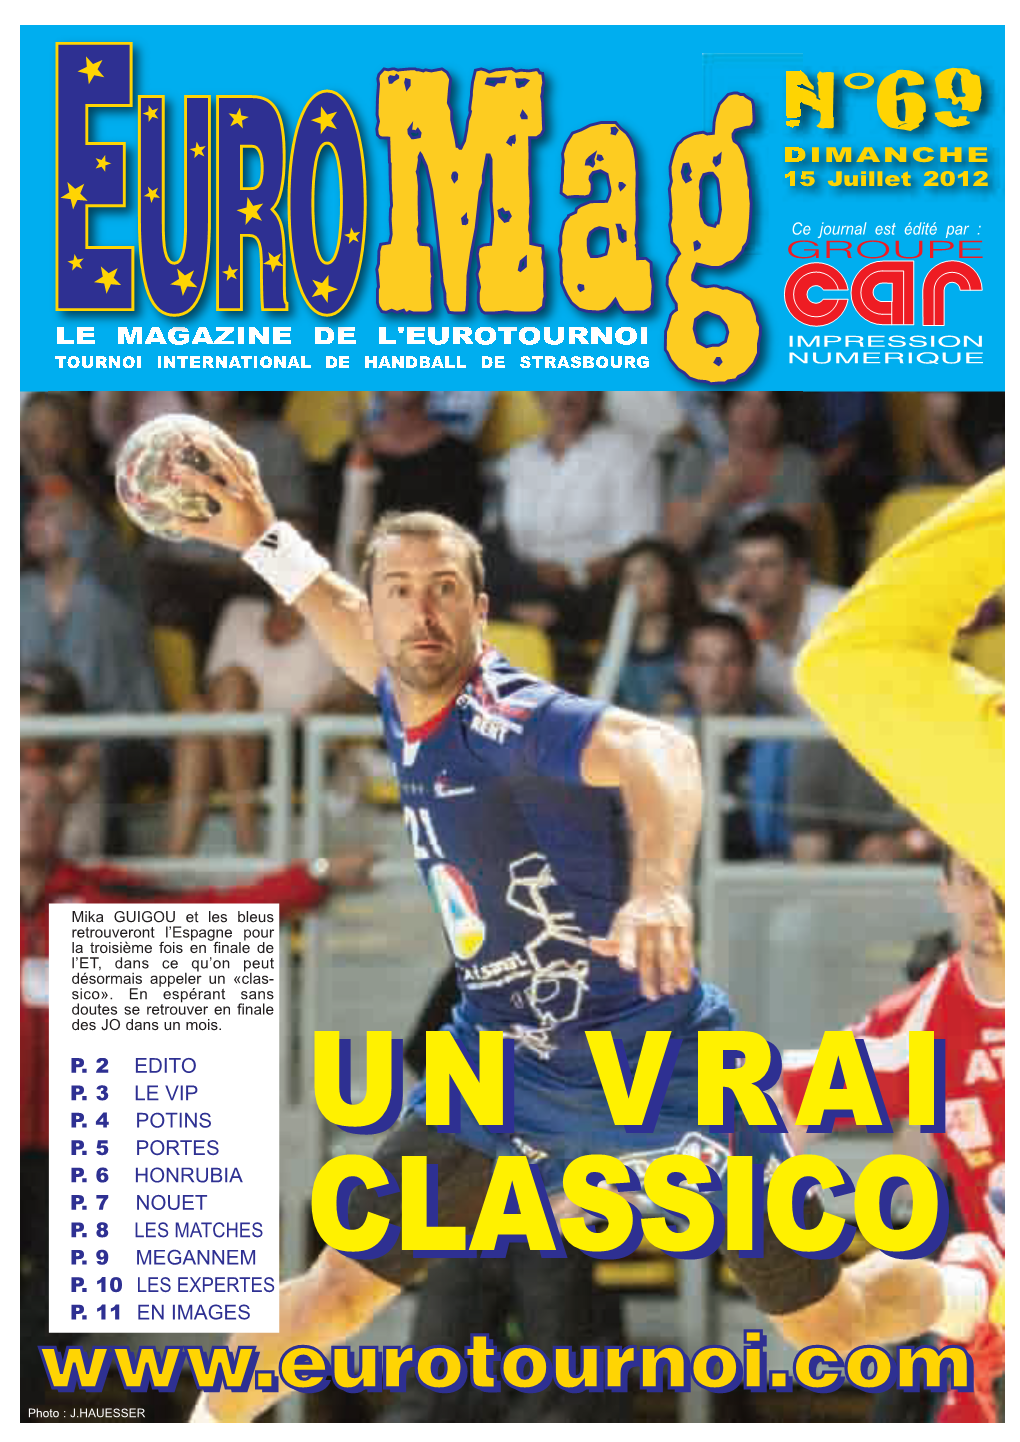 Le Magazine De L'eurotournoi Tournoi International De Handball De Strasbourg